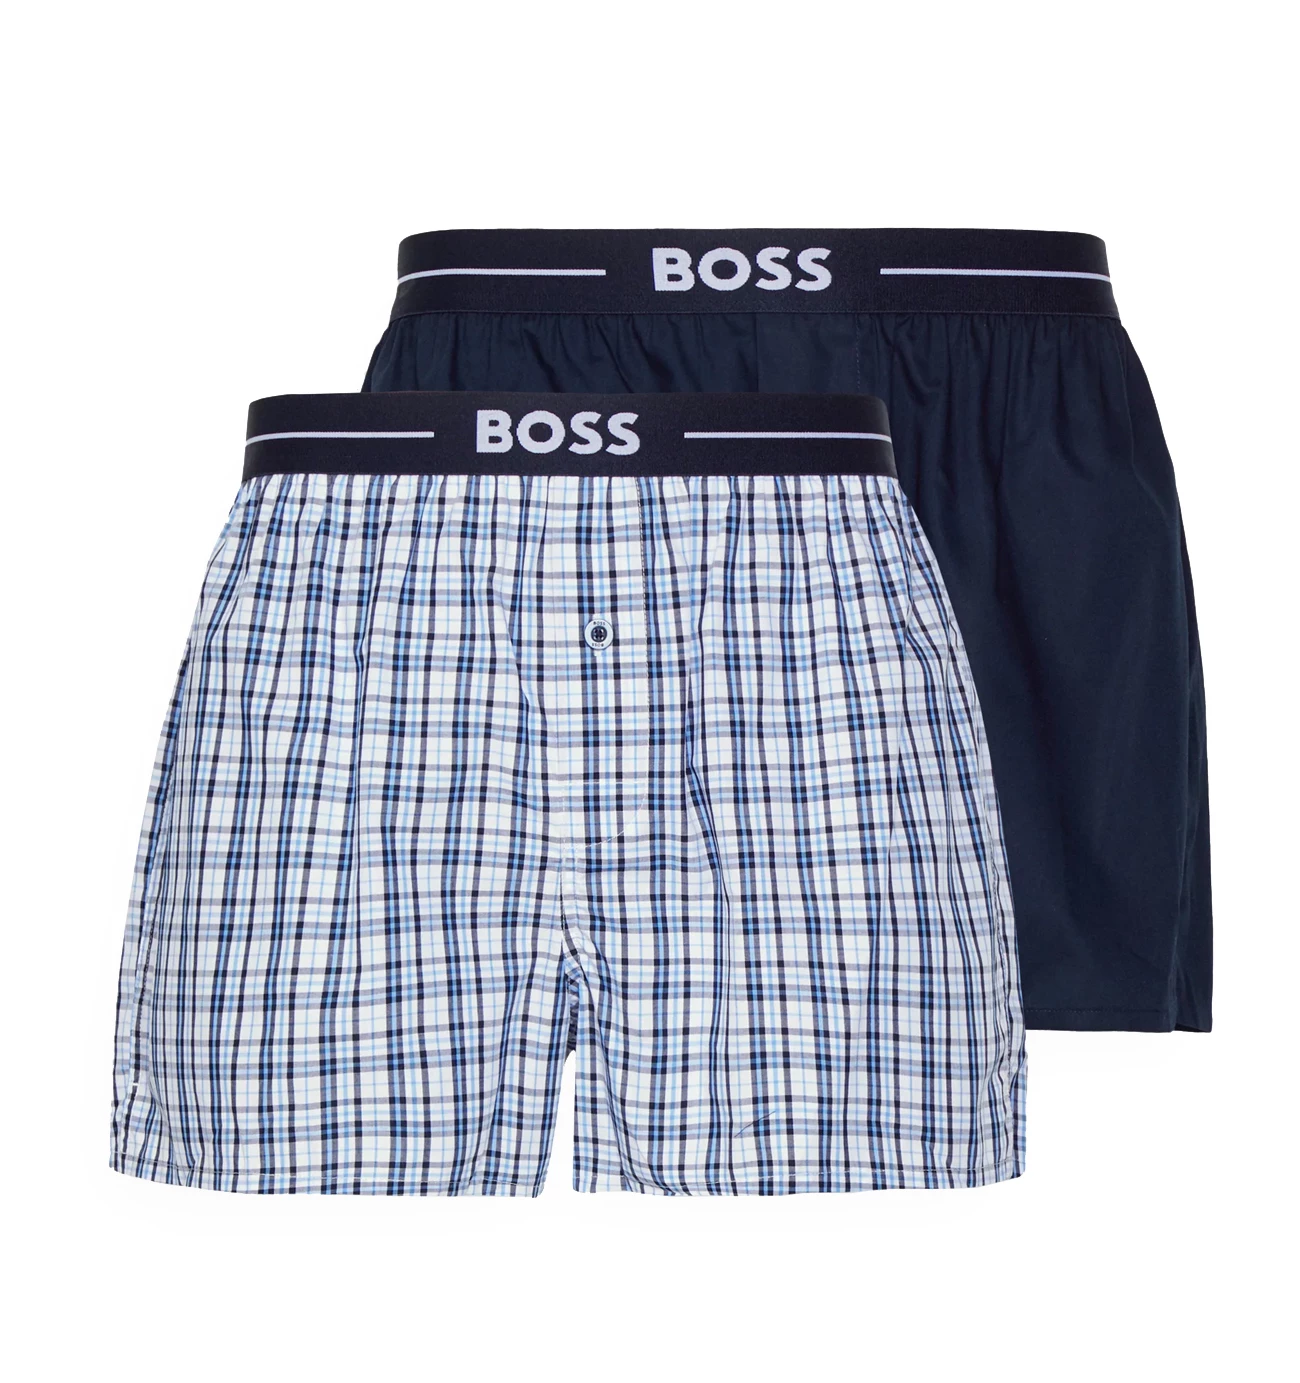 BOSS - trenky 2PACK natural pure cotton blue combo - limitovaná fashion edícia (HUGO BOSS)